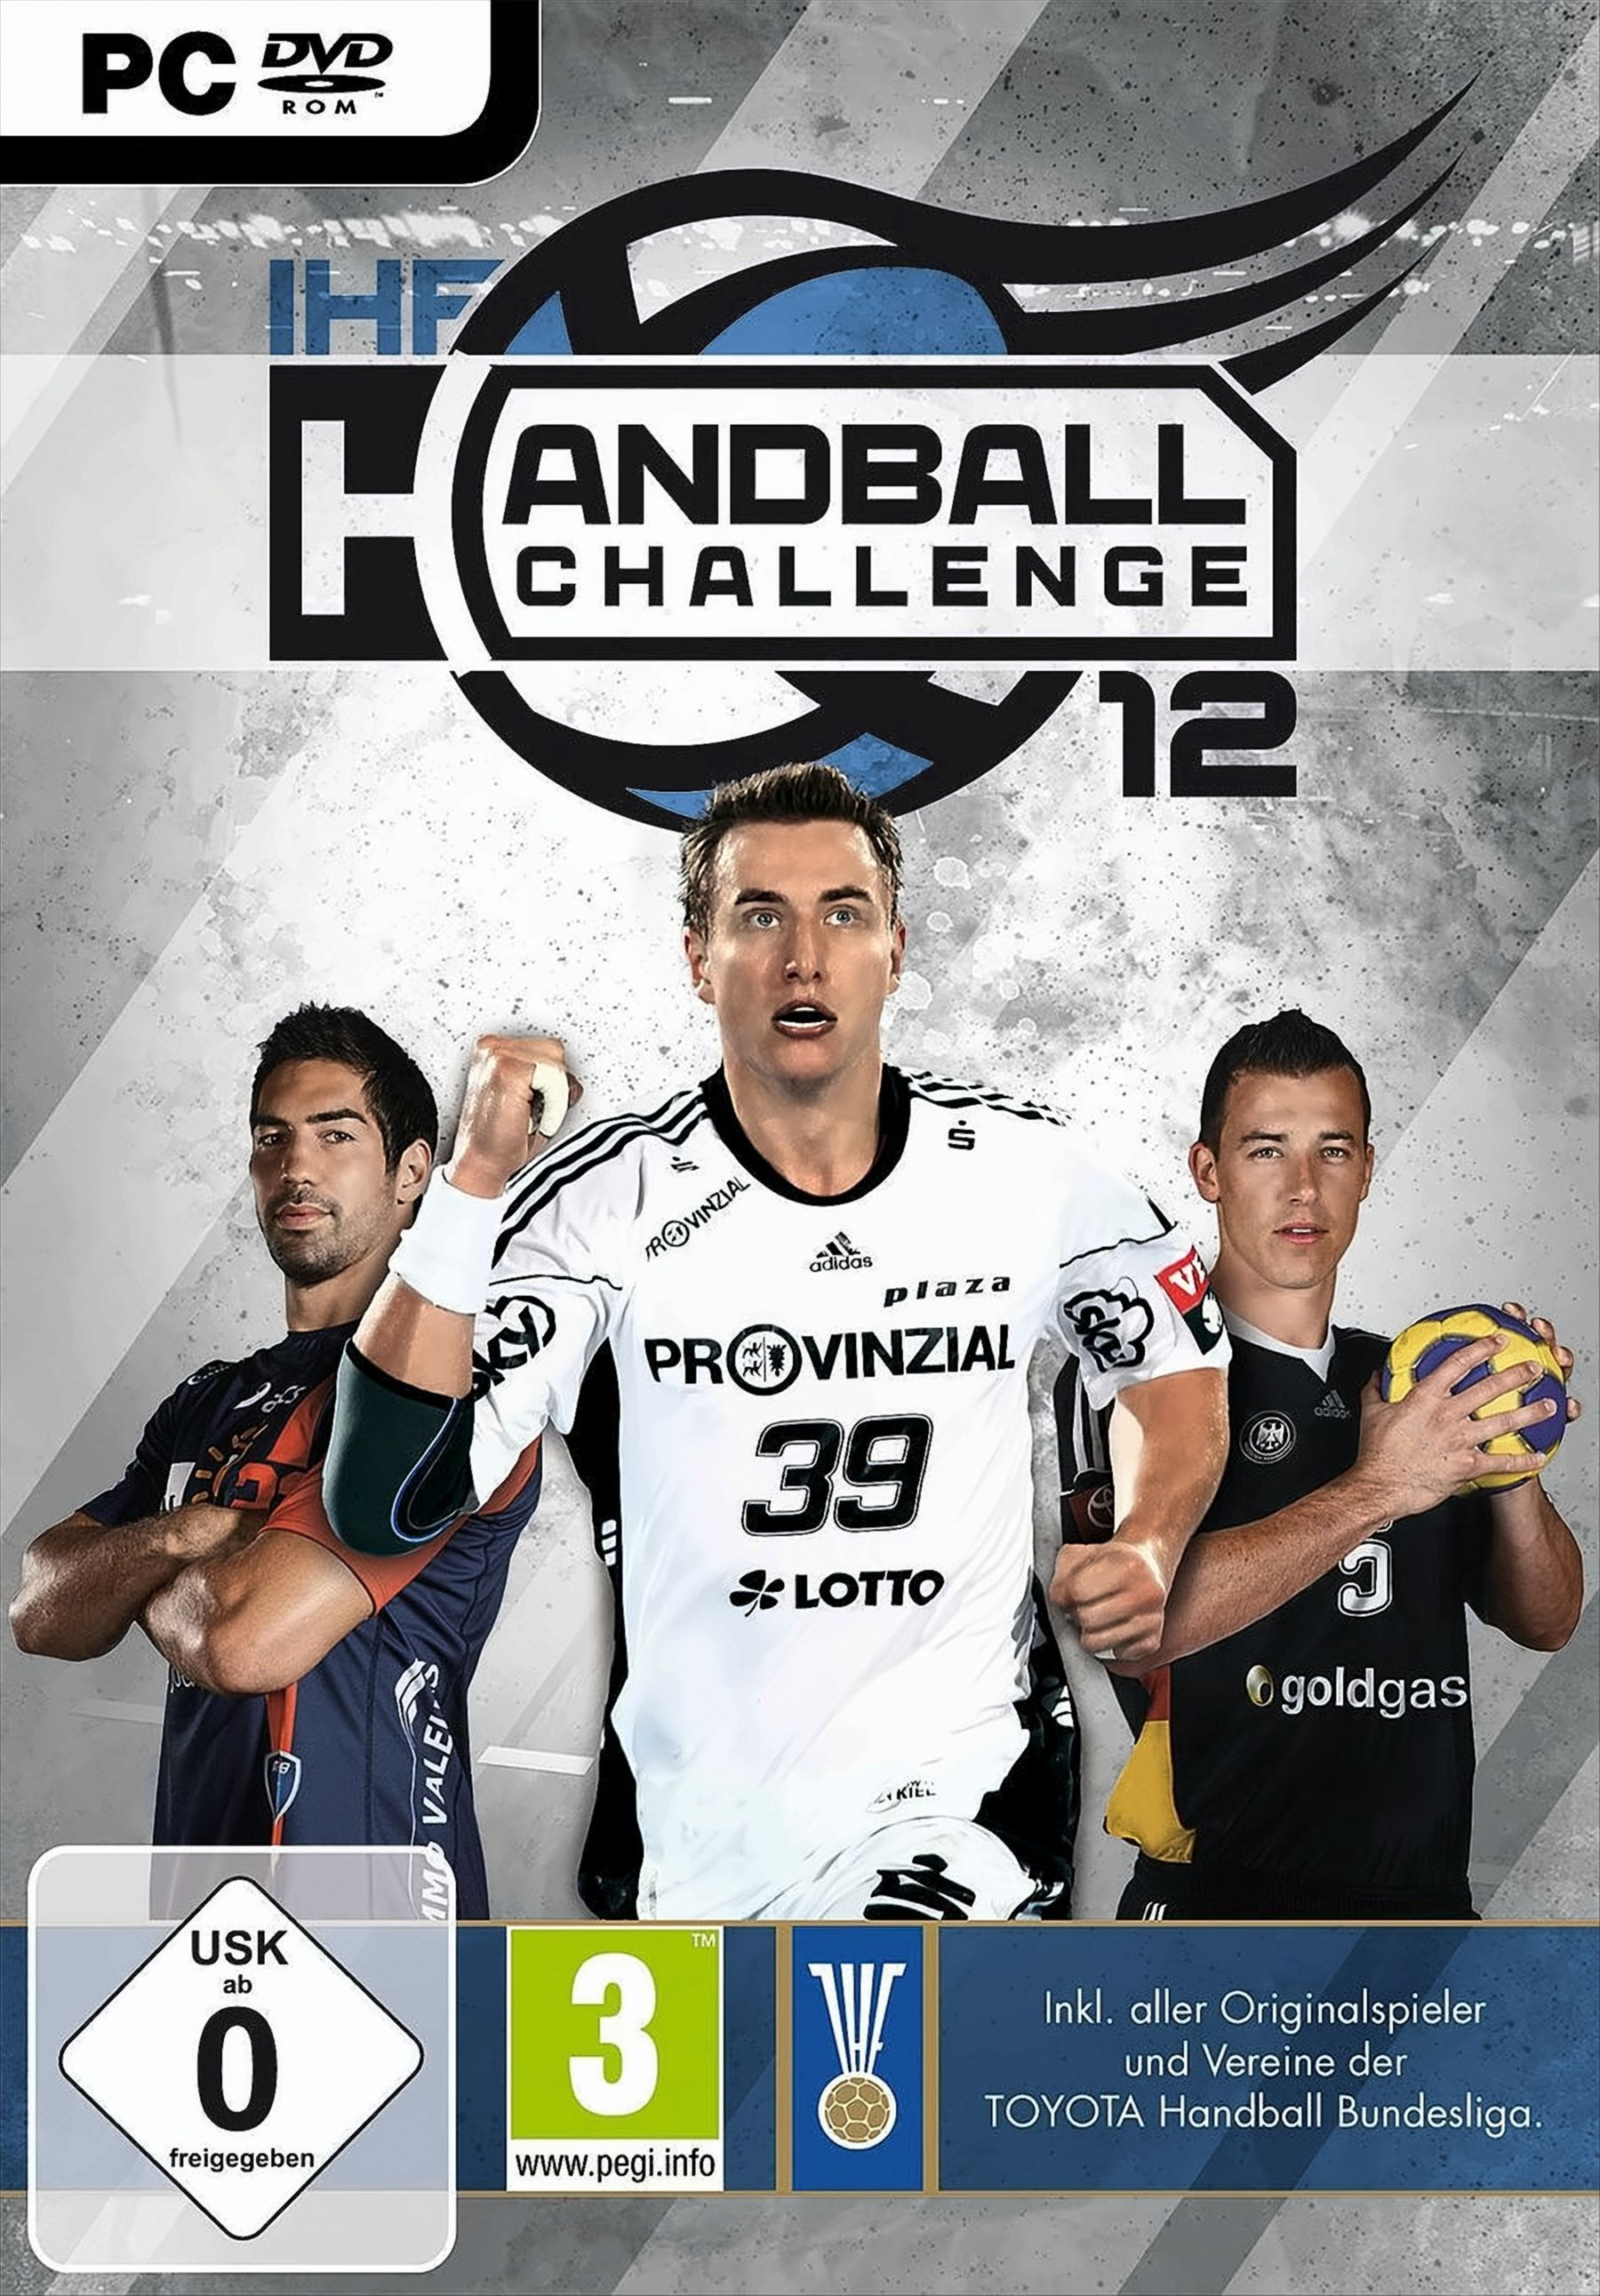 [PC] [PC] Handball - IHF Challenge 12 -